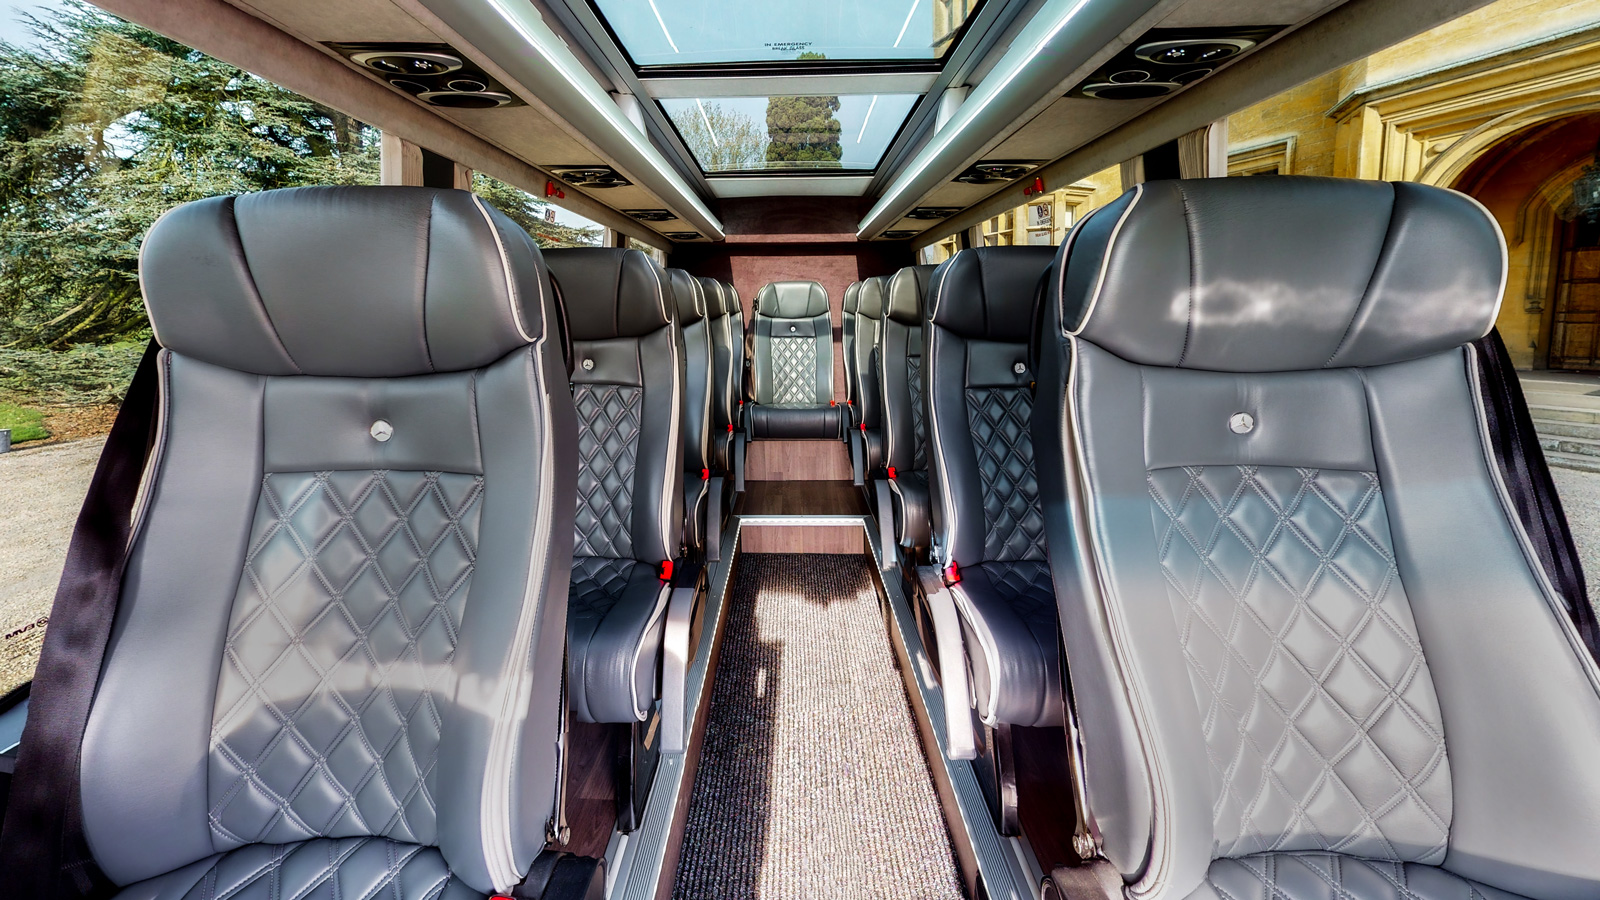 Mercedes Sprinter Luxury 16 seater minibus interior outside a stately home